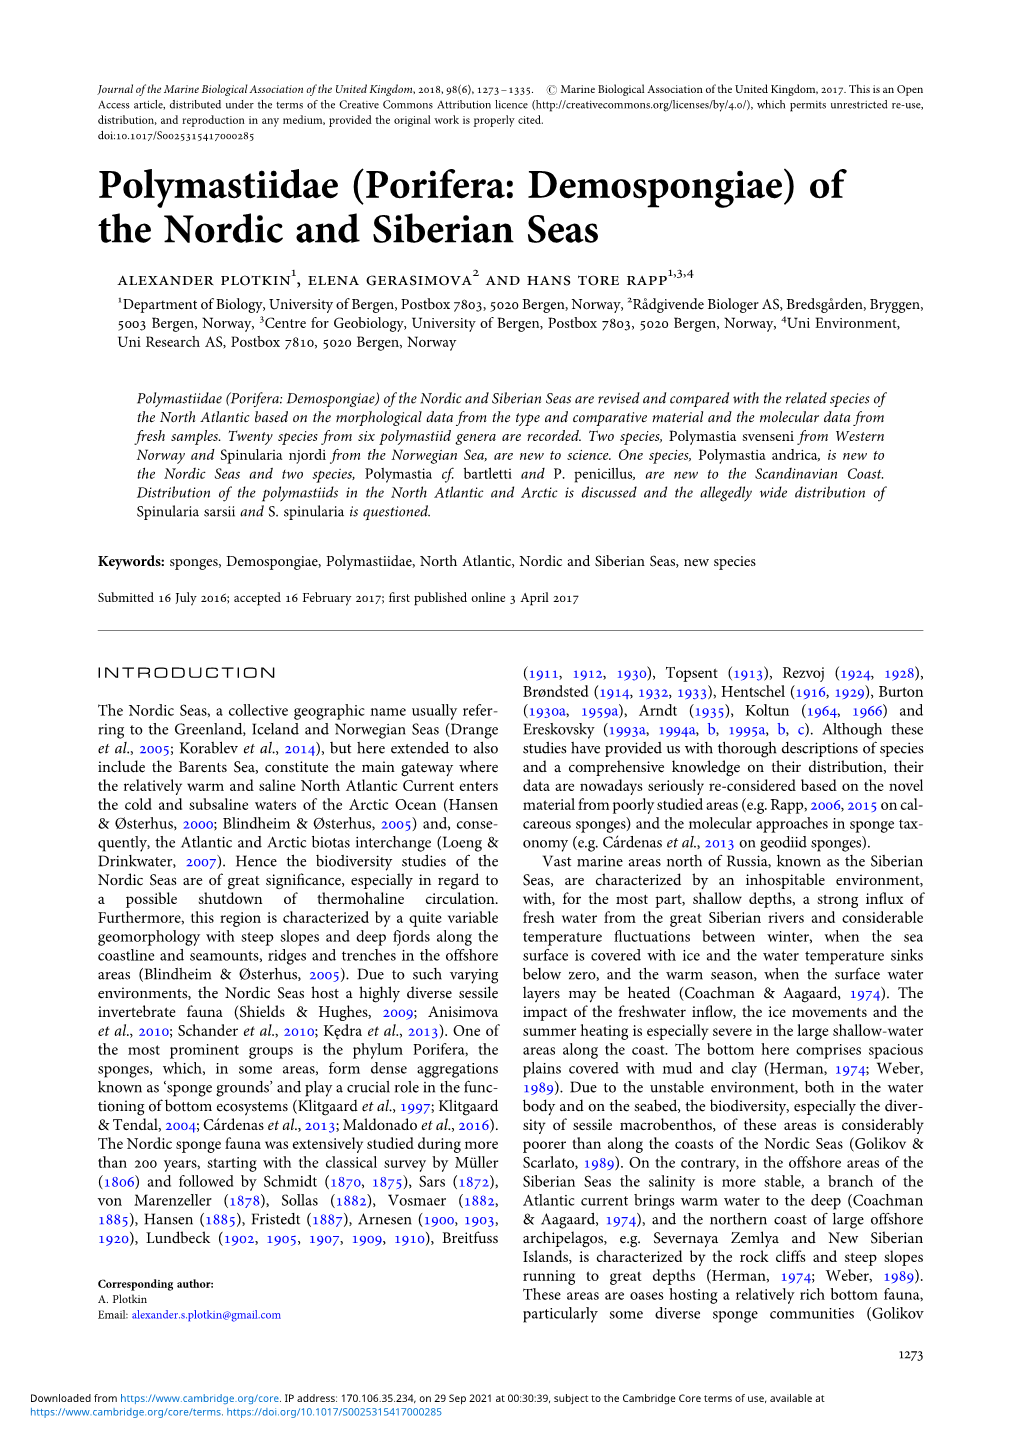 (Porifera: Demospongiae) of the Nordic and Siberian Seas